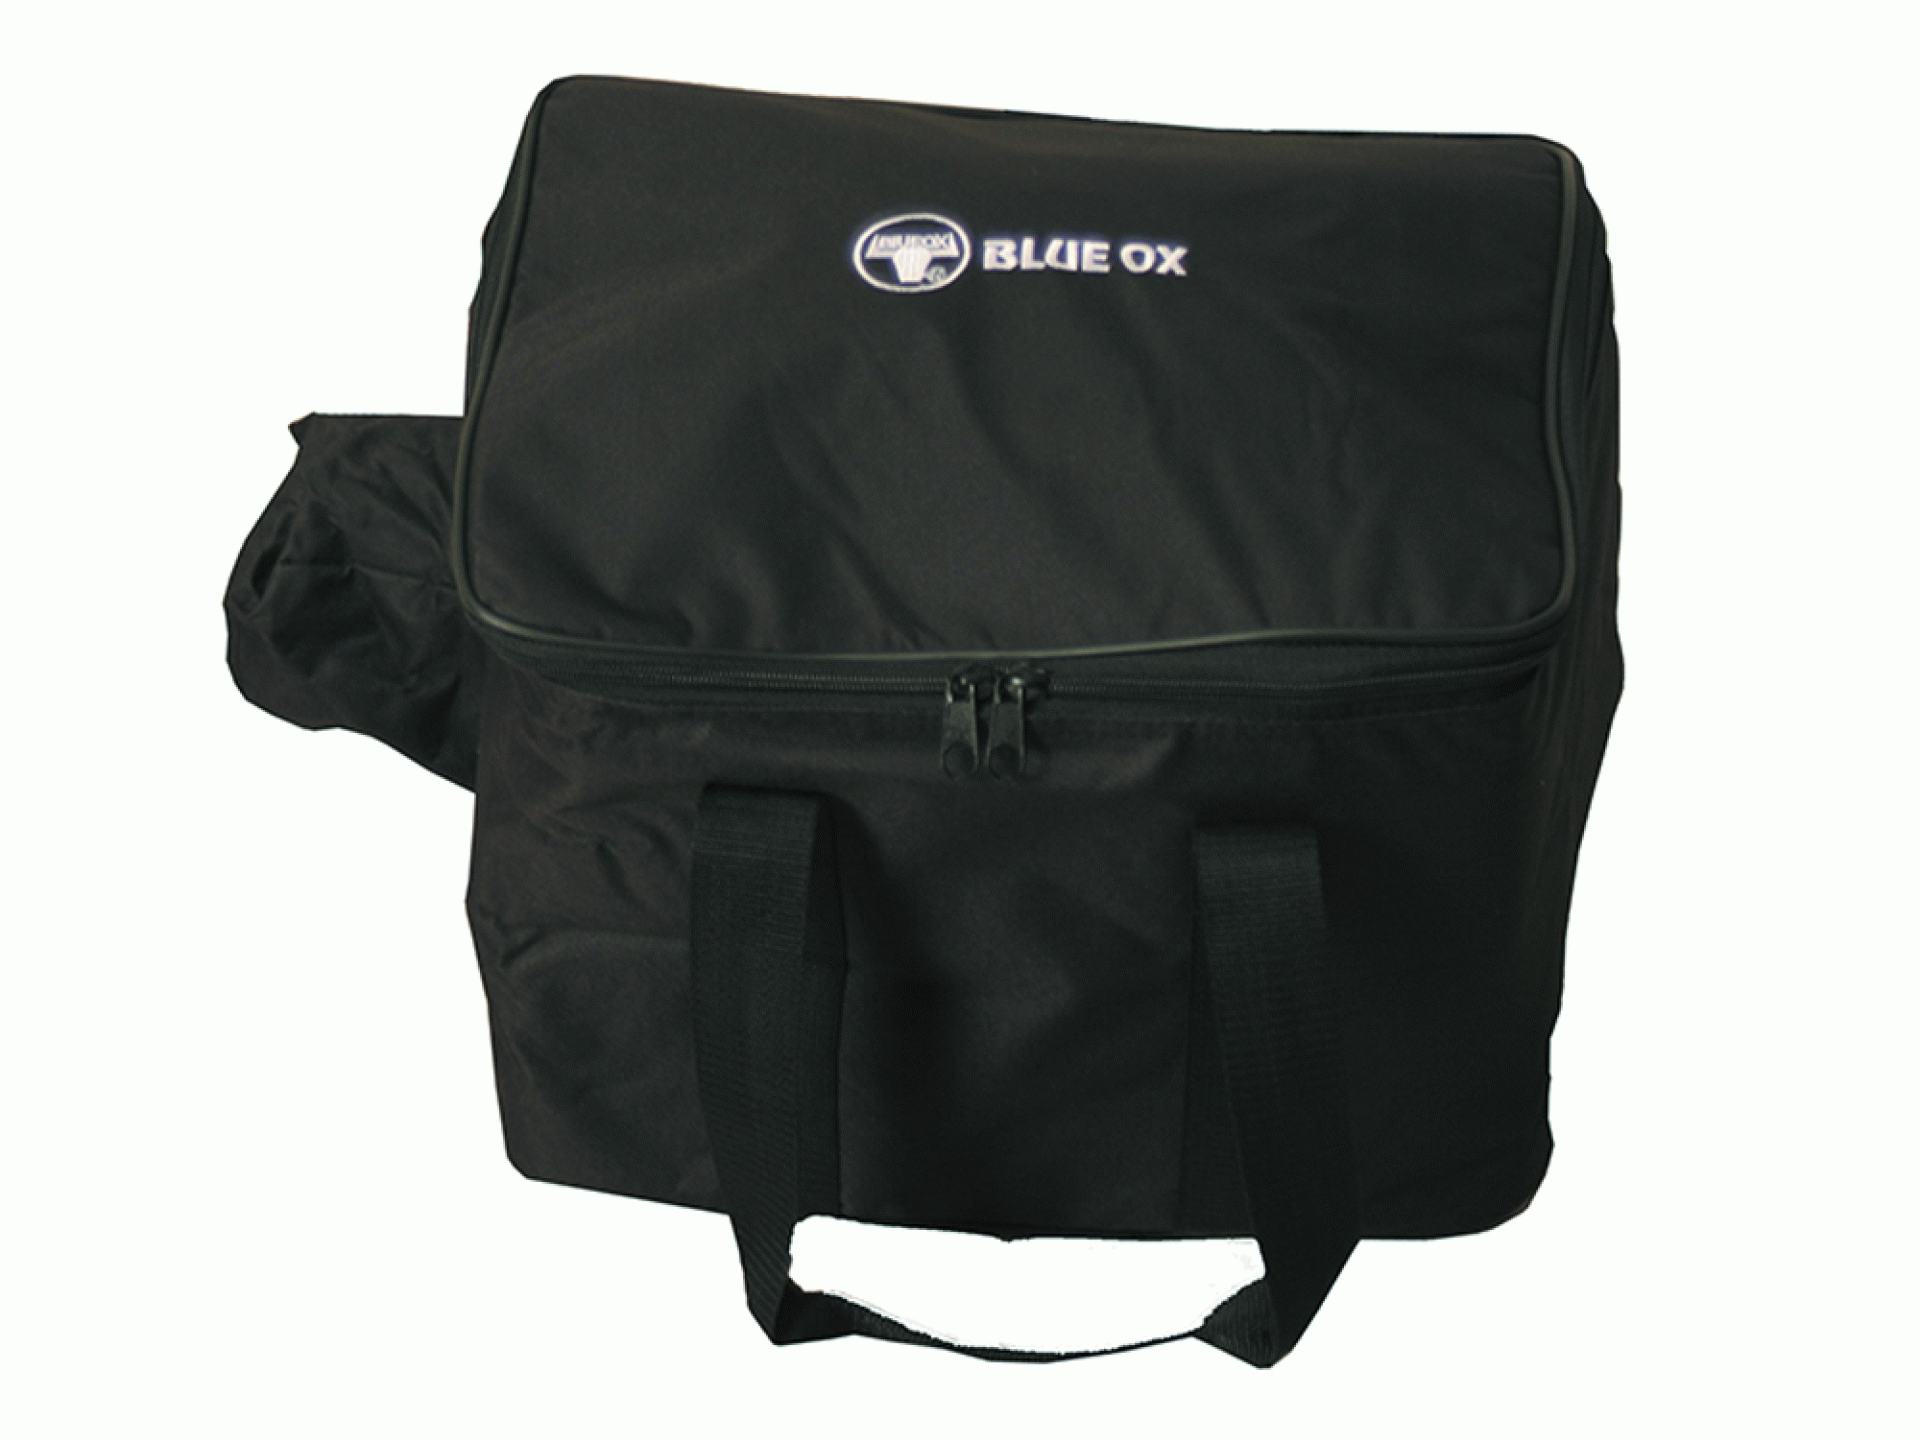 BLUE OX | BRK2506 | Patriot braking system storage bag